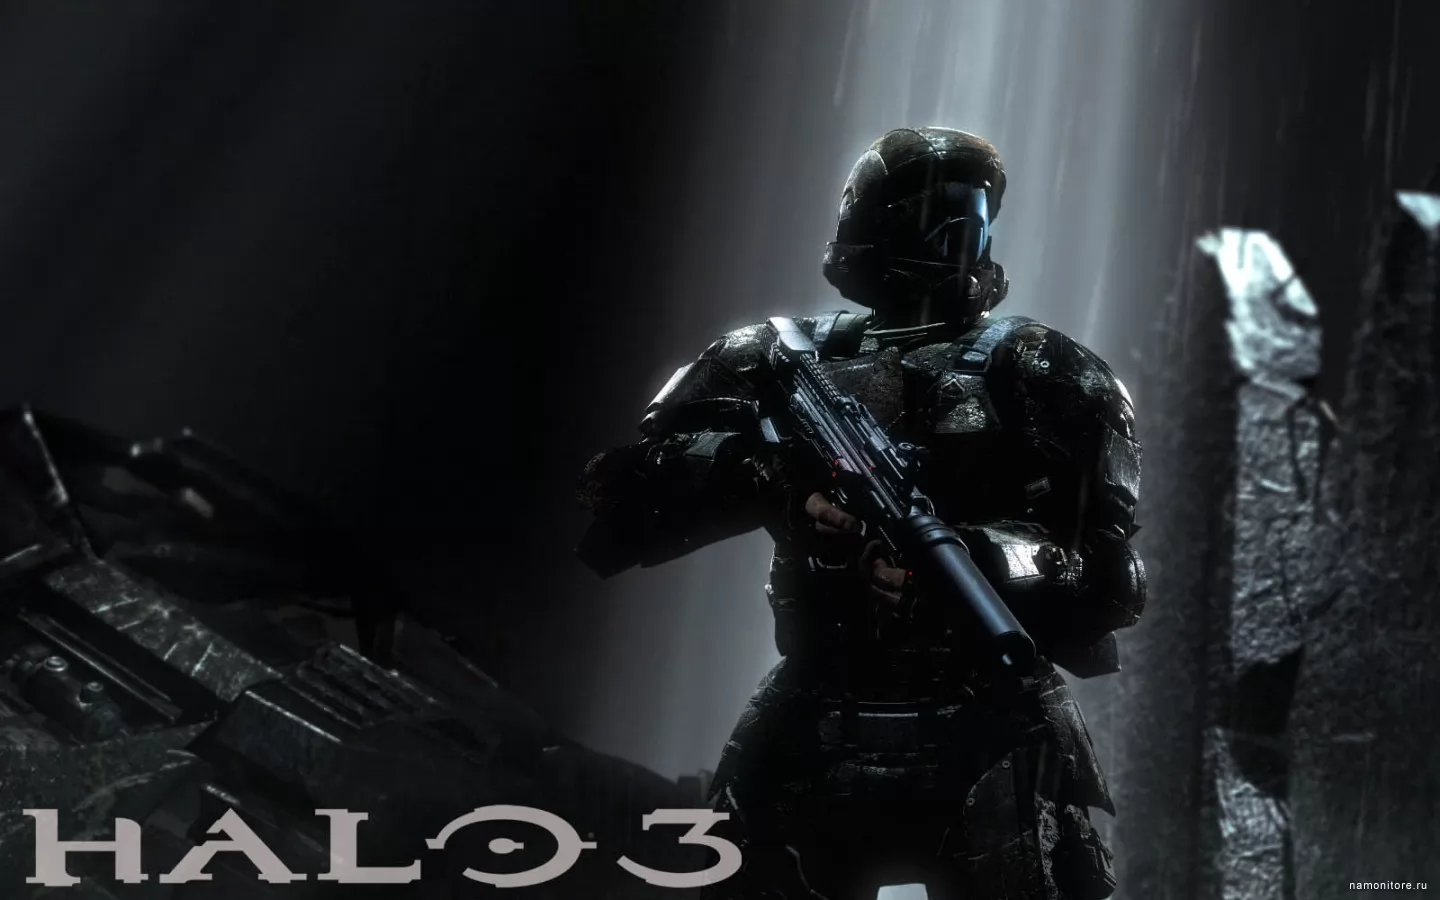 Halo 3: ODST, black, computer games, guns x